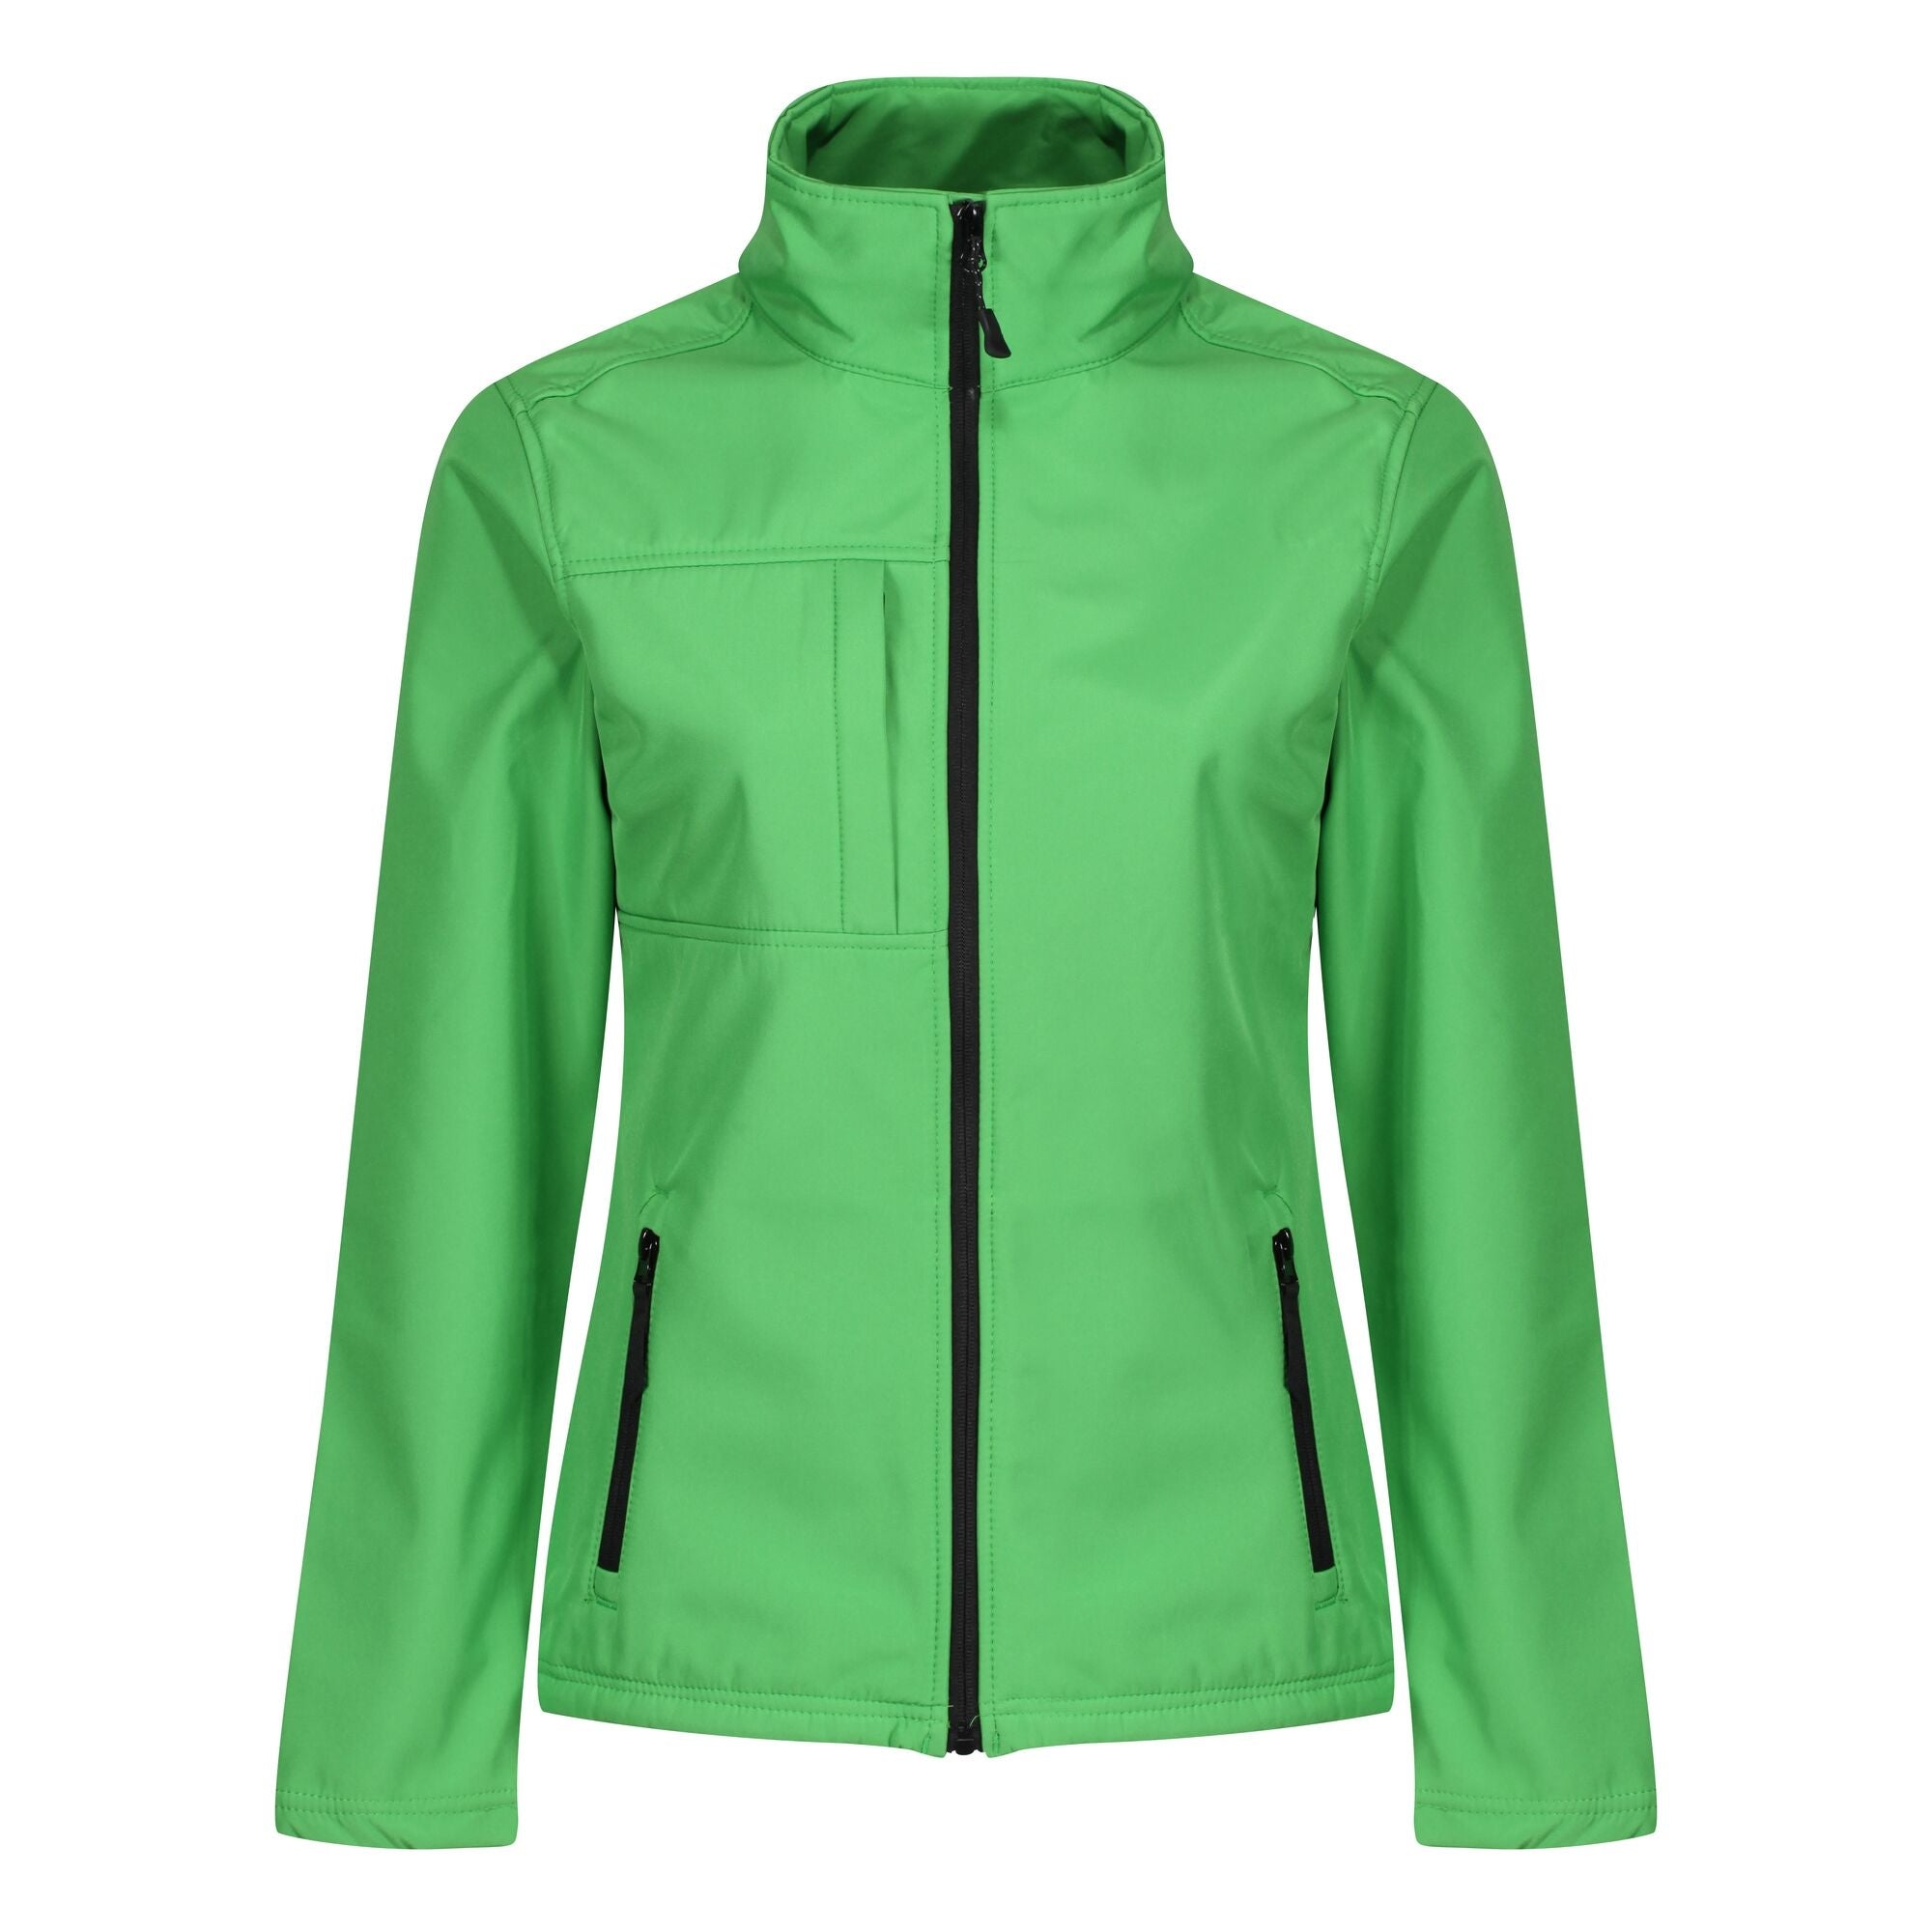 Regatta Ladies Octagon II Softshell Jacket - Extreme Green/Black